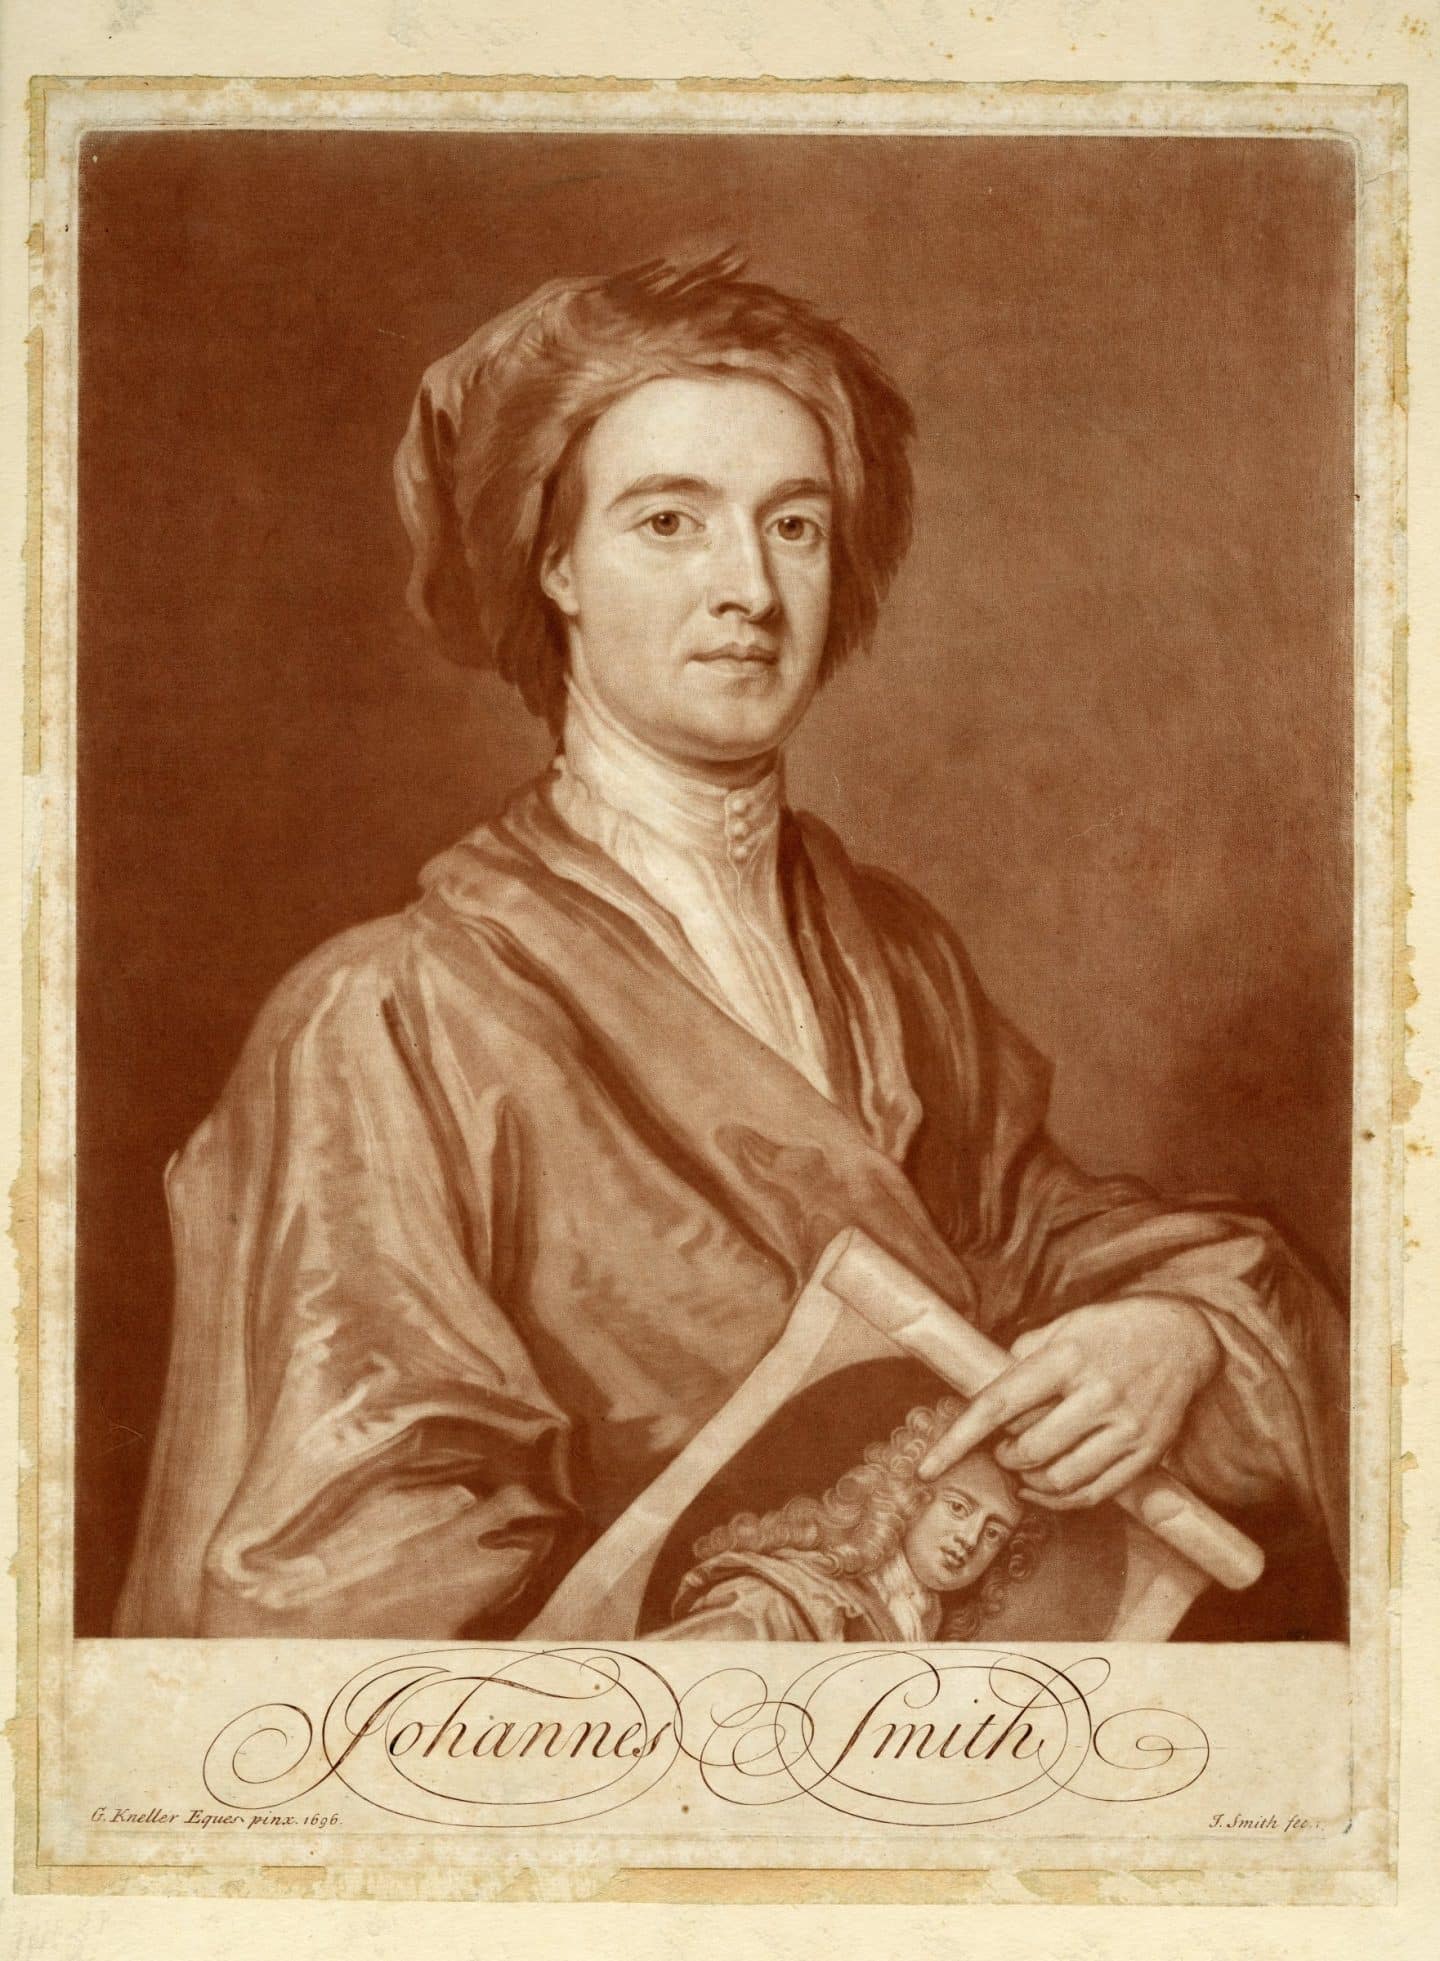 John Smith (after Godfrey Kneller), Portrait of John Smith, 1716, mezzotint on paper. Gift of Mary C. Stewart in memory of J. Douglas Stewart, 2013 (56.014.04).